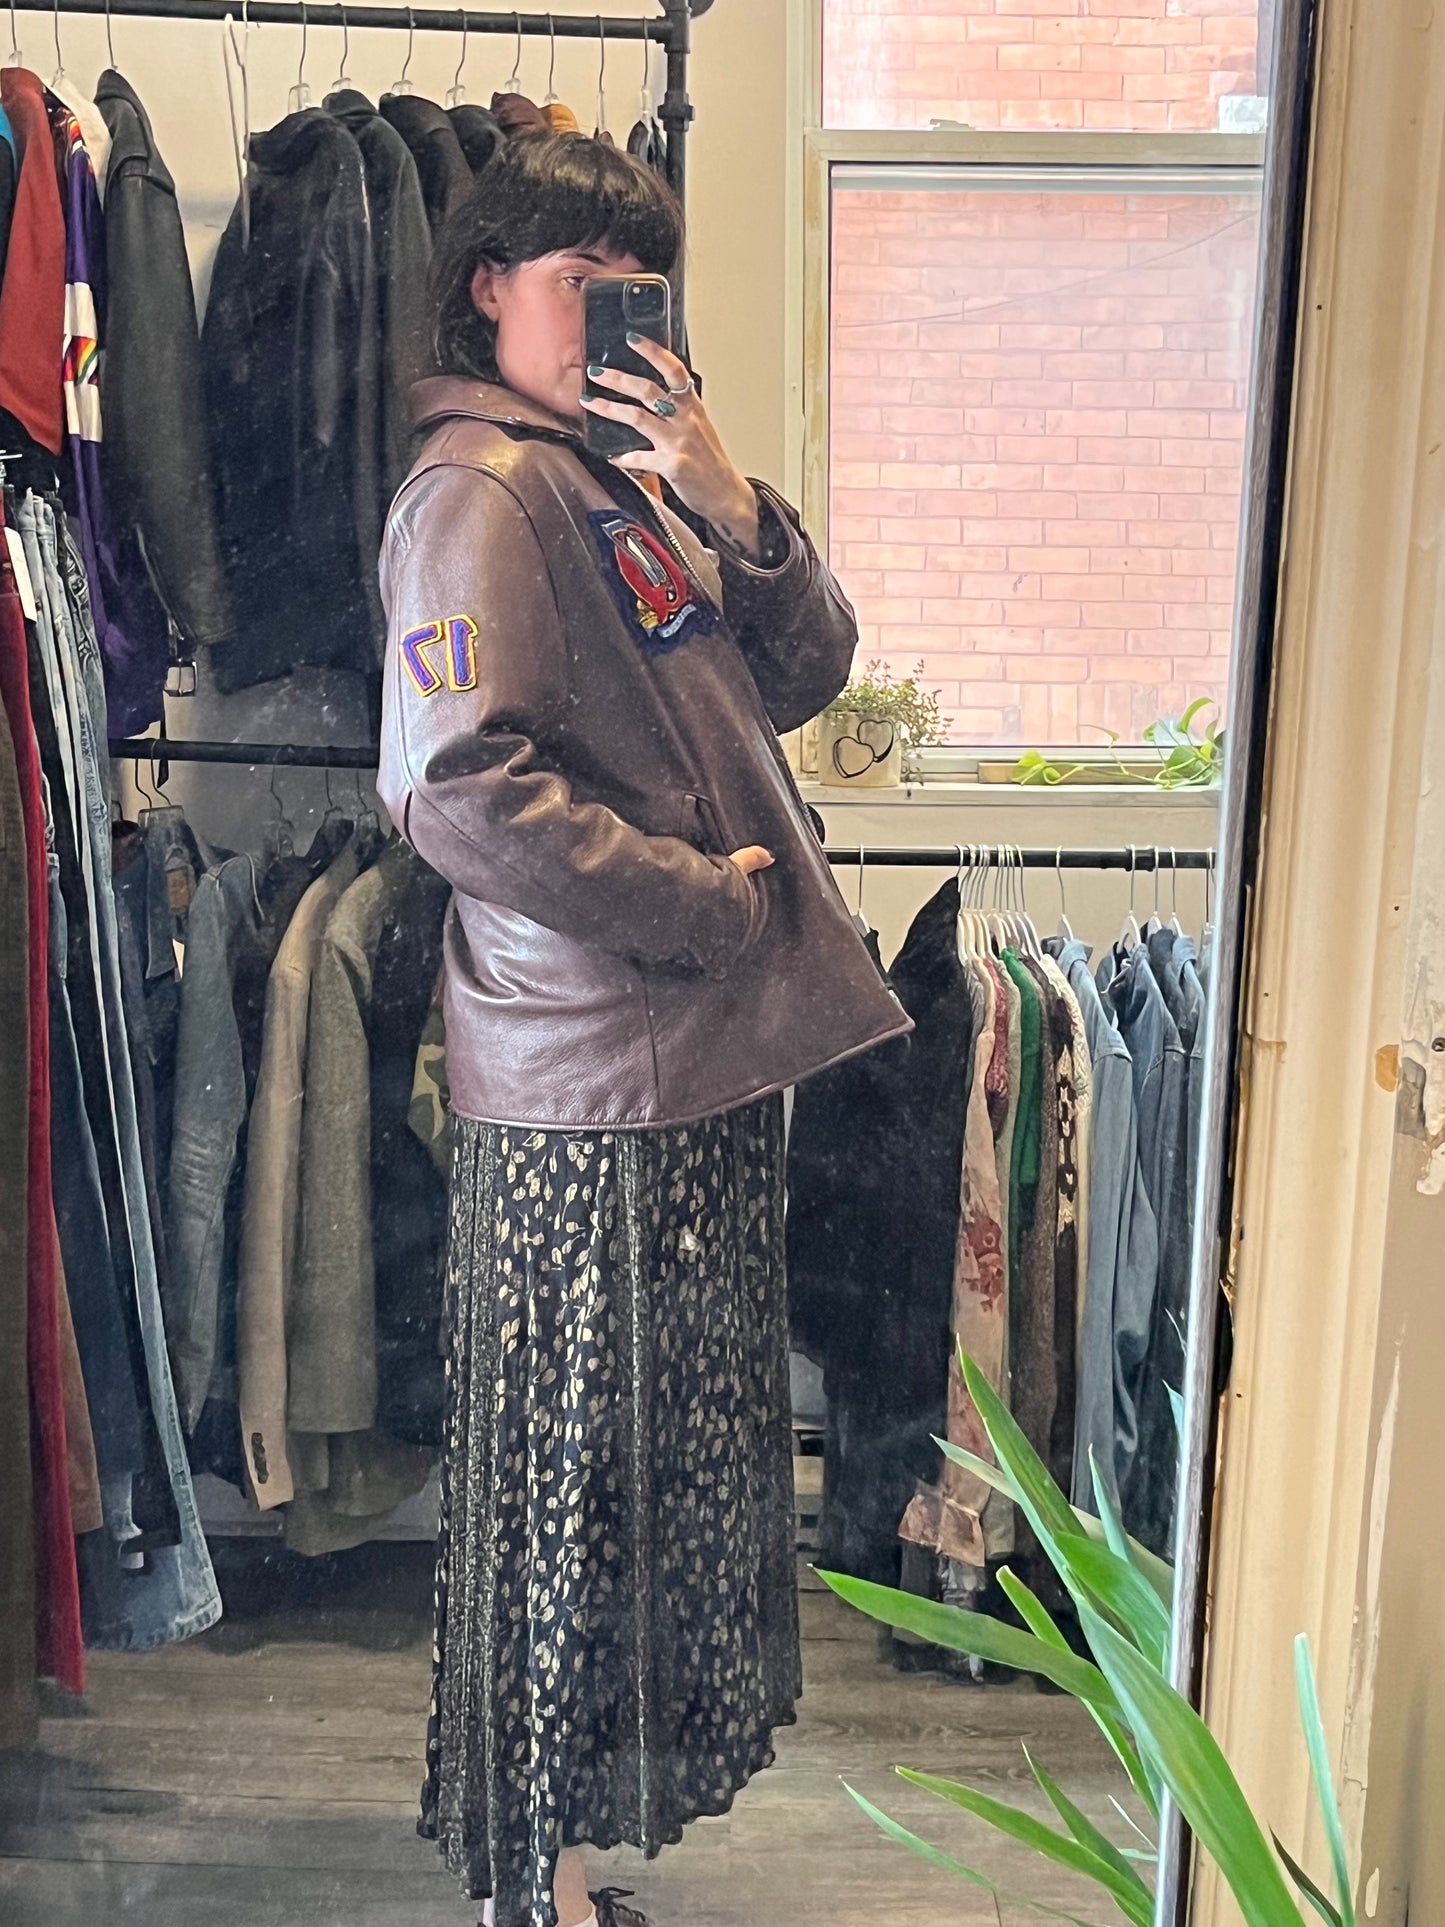 80’s Vintage Queens Burgundy Leather Varsity Letterman Jacket / Size M-L